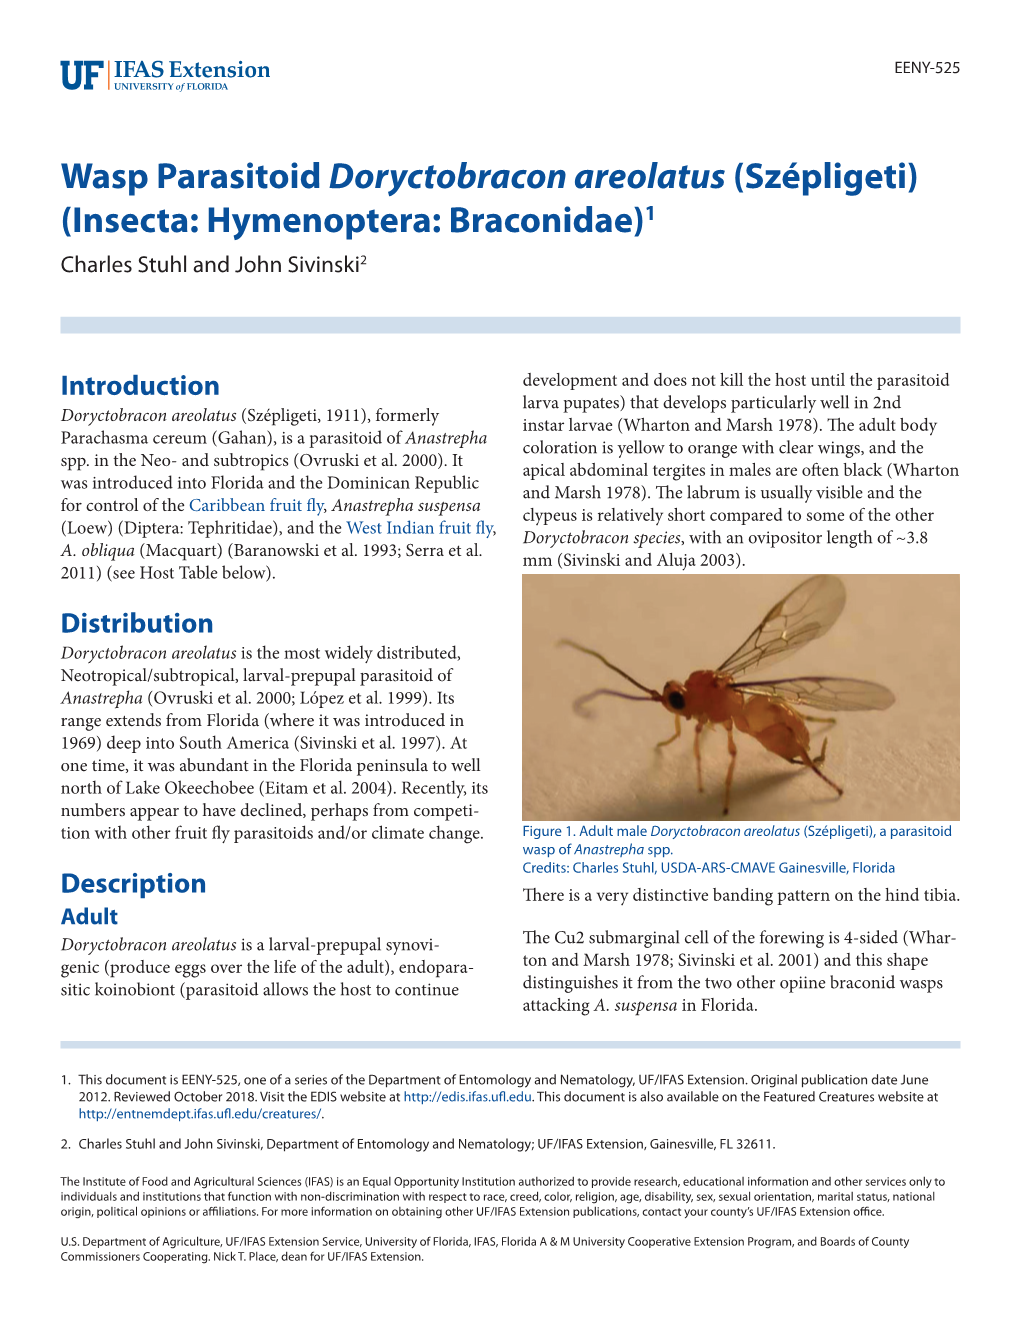 Wasp Parasitoid Doryctobracon Areolatus (Szépligeti) (Insecta: Hymenoptera: Braconidae)1 Charles Stuhl and John Sivinski2